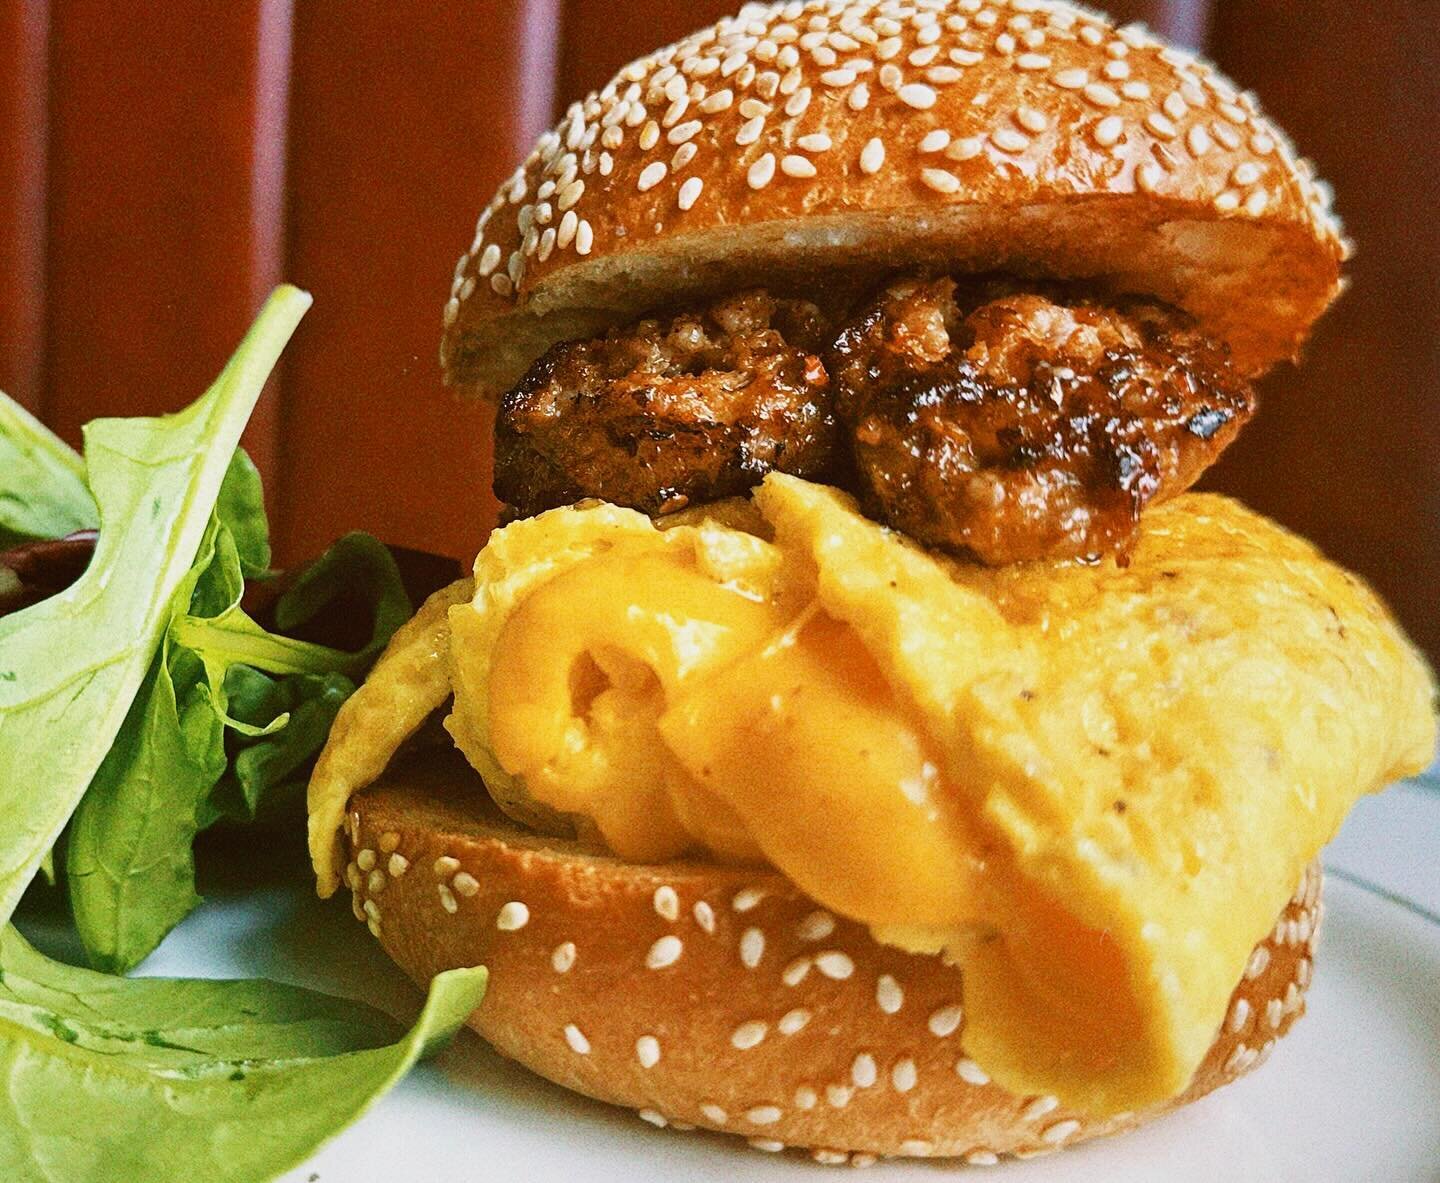 Sausage Egg and Cheese #velma #restaurant #brunch #sausage #egg #cheese #potatobun #sandwich #breakfast #italianamerican #ridgewood #queens #nyc